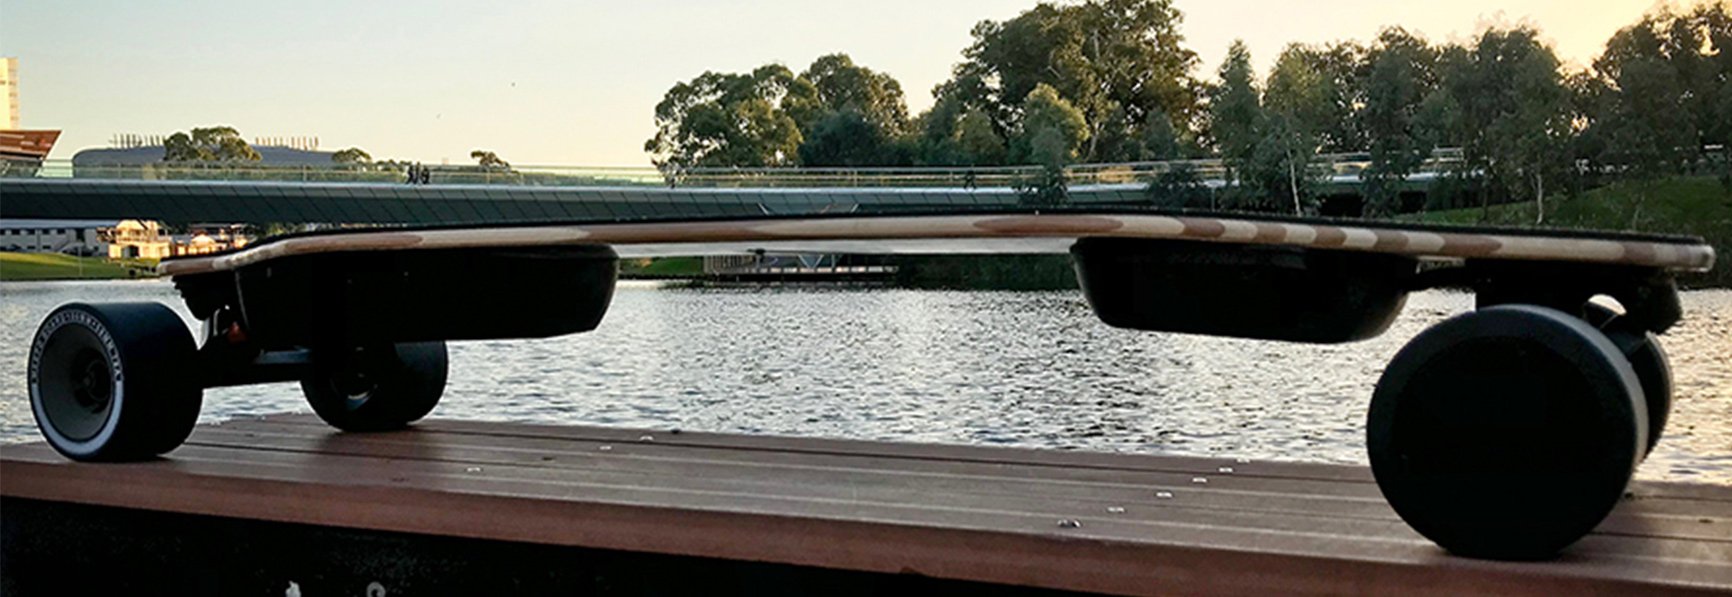 meepo board on the bridge